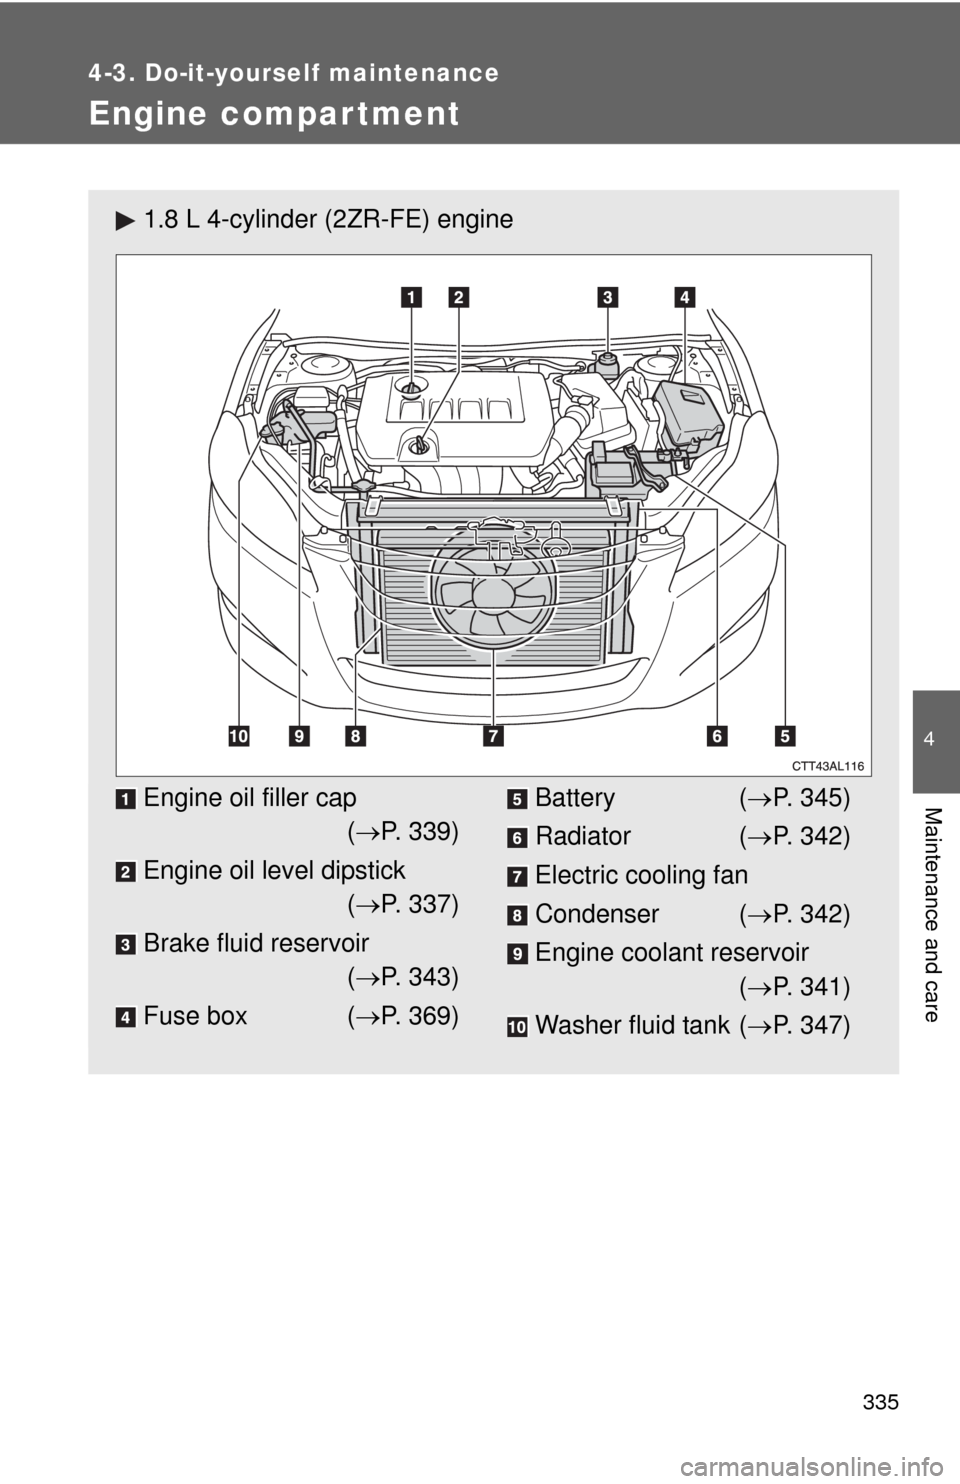 TOYOTA MATRIX 2013 E140 / 2.G Owners Manual 335
4-3. Do-it-yourself maintenance
4
Maintenance and care
Engine compar tment
1.8 L 4-cylinder (2ZR-FE) engine
Engine oil filler cap
(P. 339)
Engine oil level dipstick
(P. 337)
Brake fluid rese